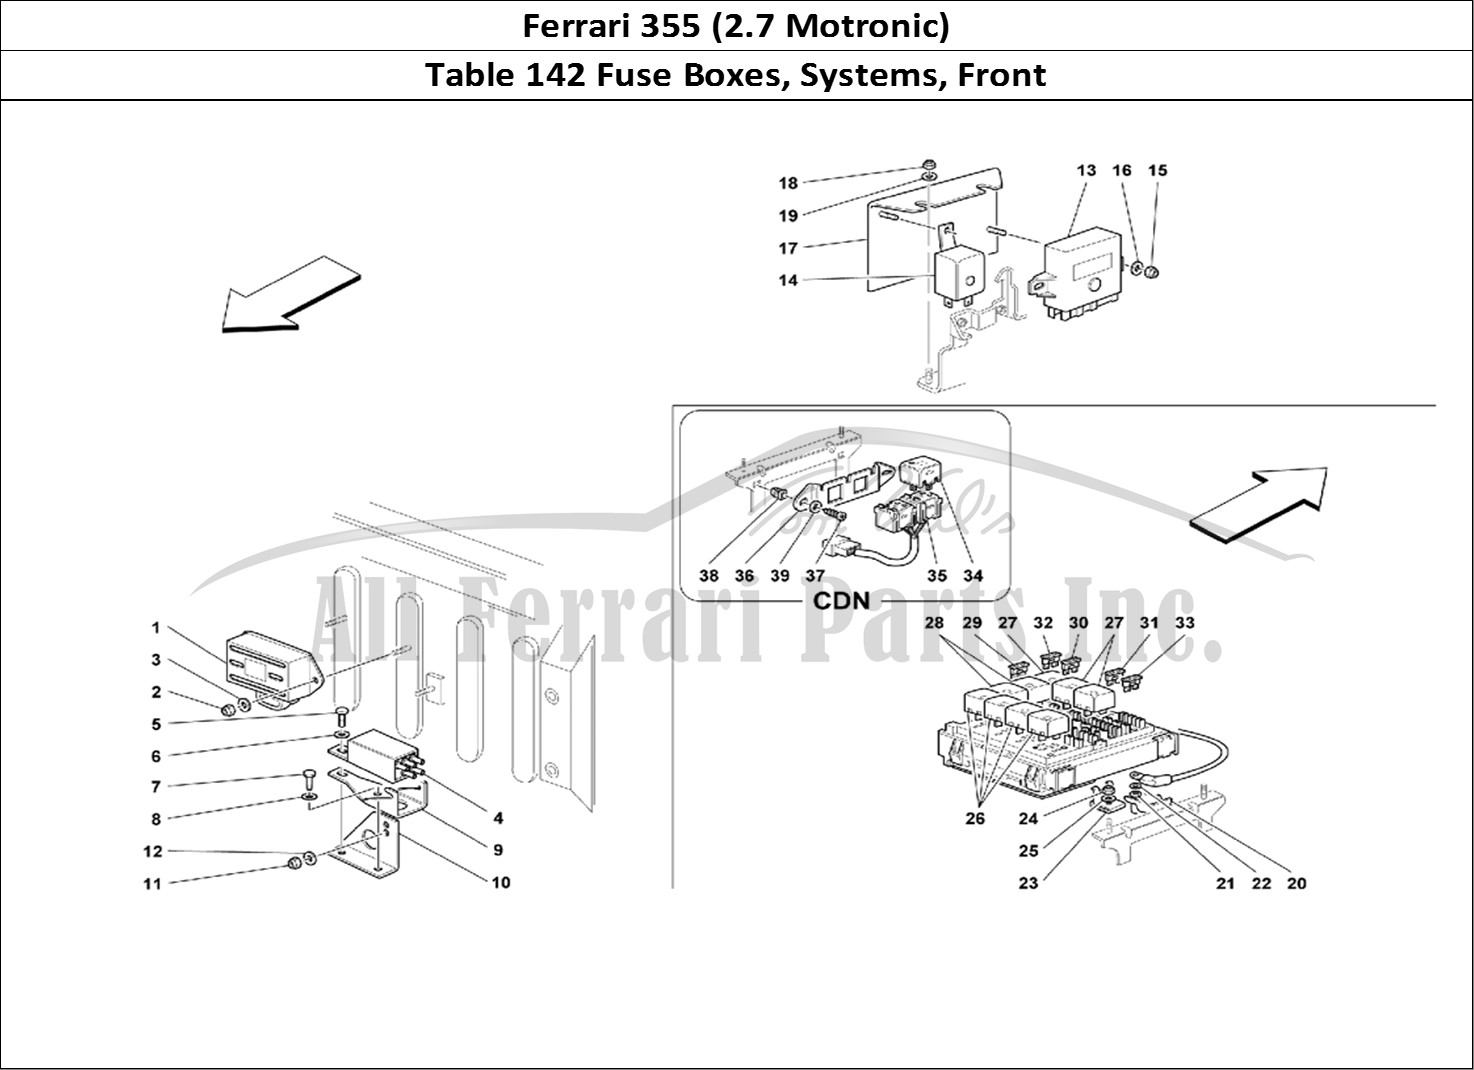 Ferrari Parts Ferrari 355 (2.7 Motronic) Page 142 Electrical Boards and Dev